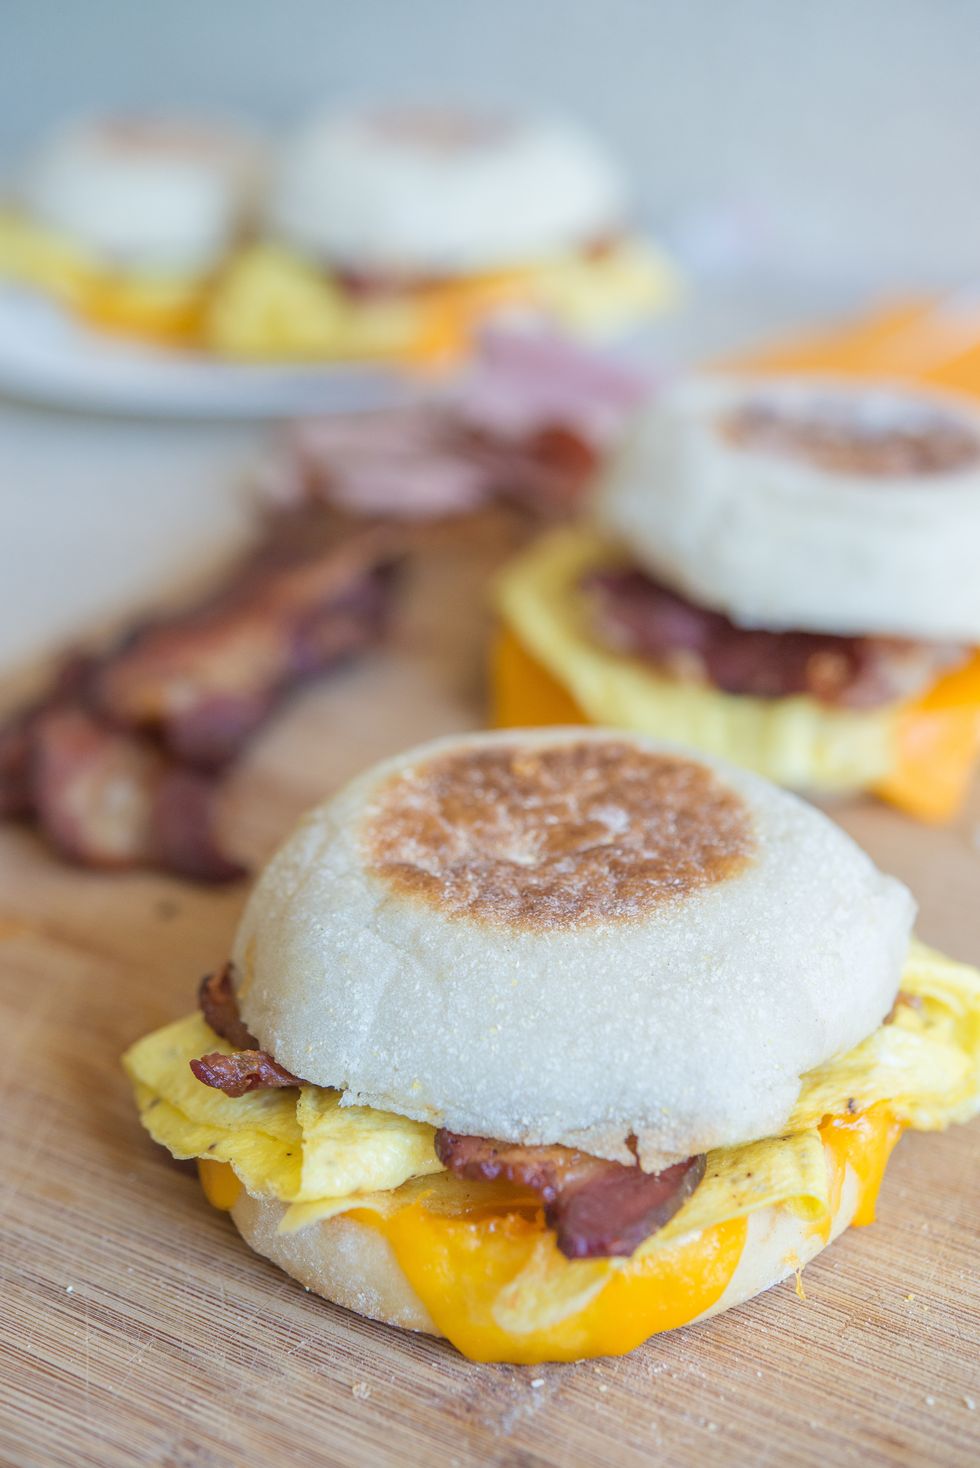 Make-Ahead and Freeze Breakfast Sandwiches